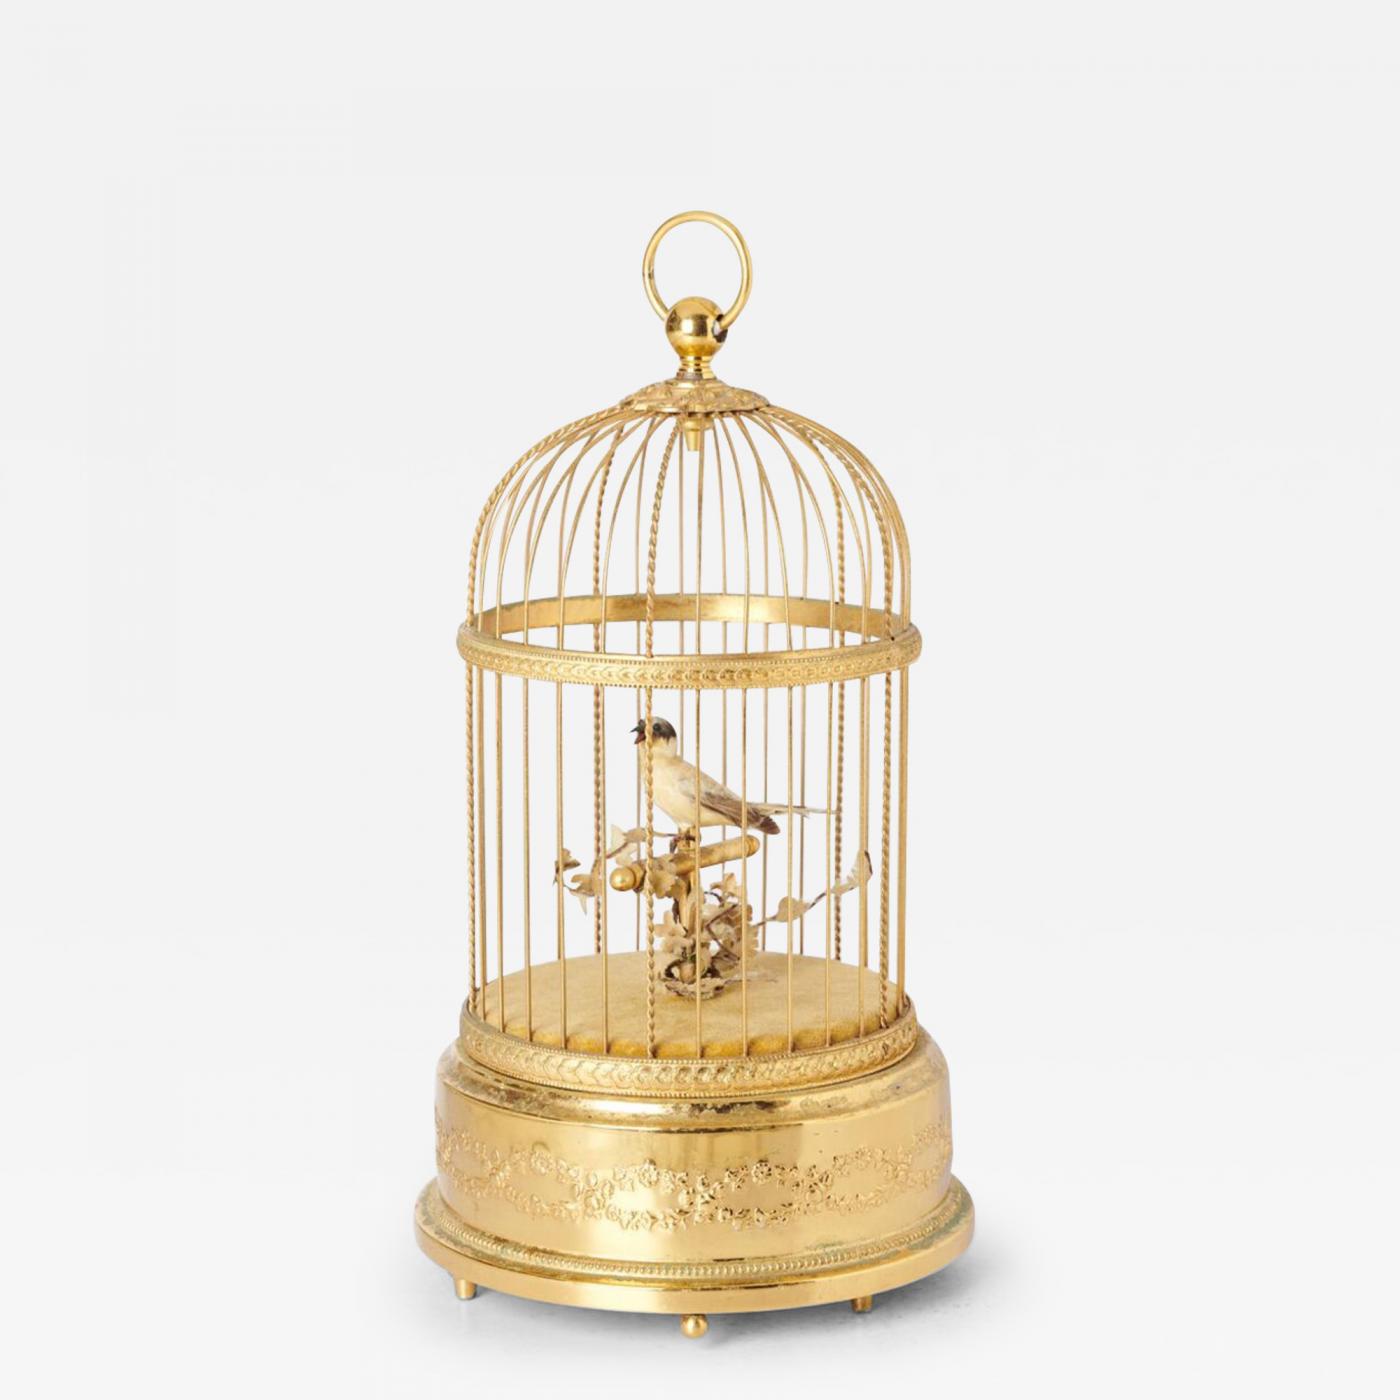 Automaton Brass Birdcage Circa 1930'S